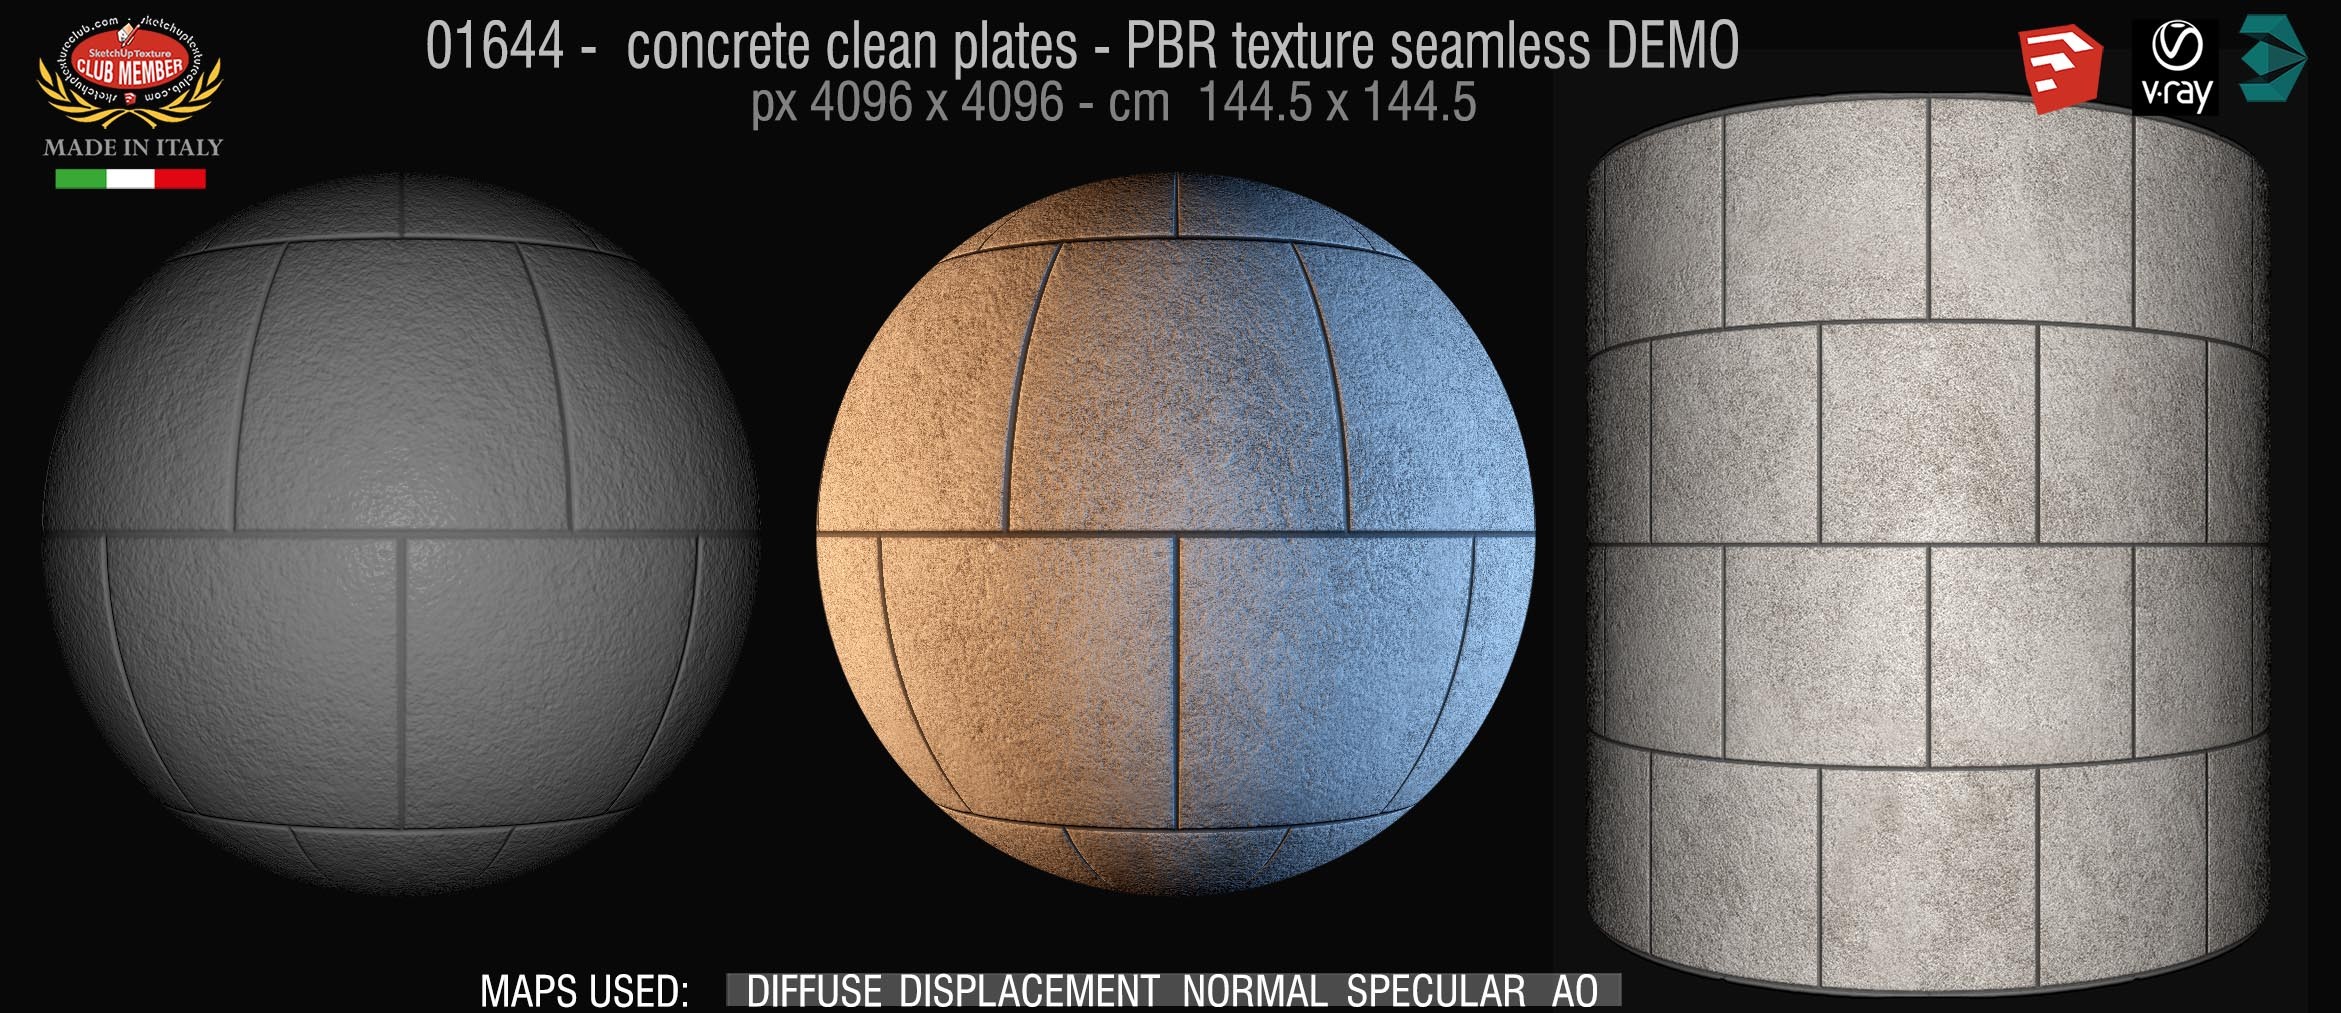 01644 concrete clean plates wall PBR texture seamless DEMO